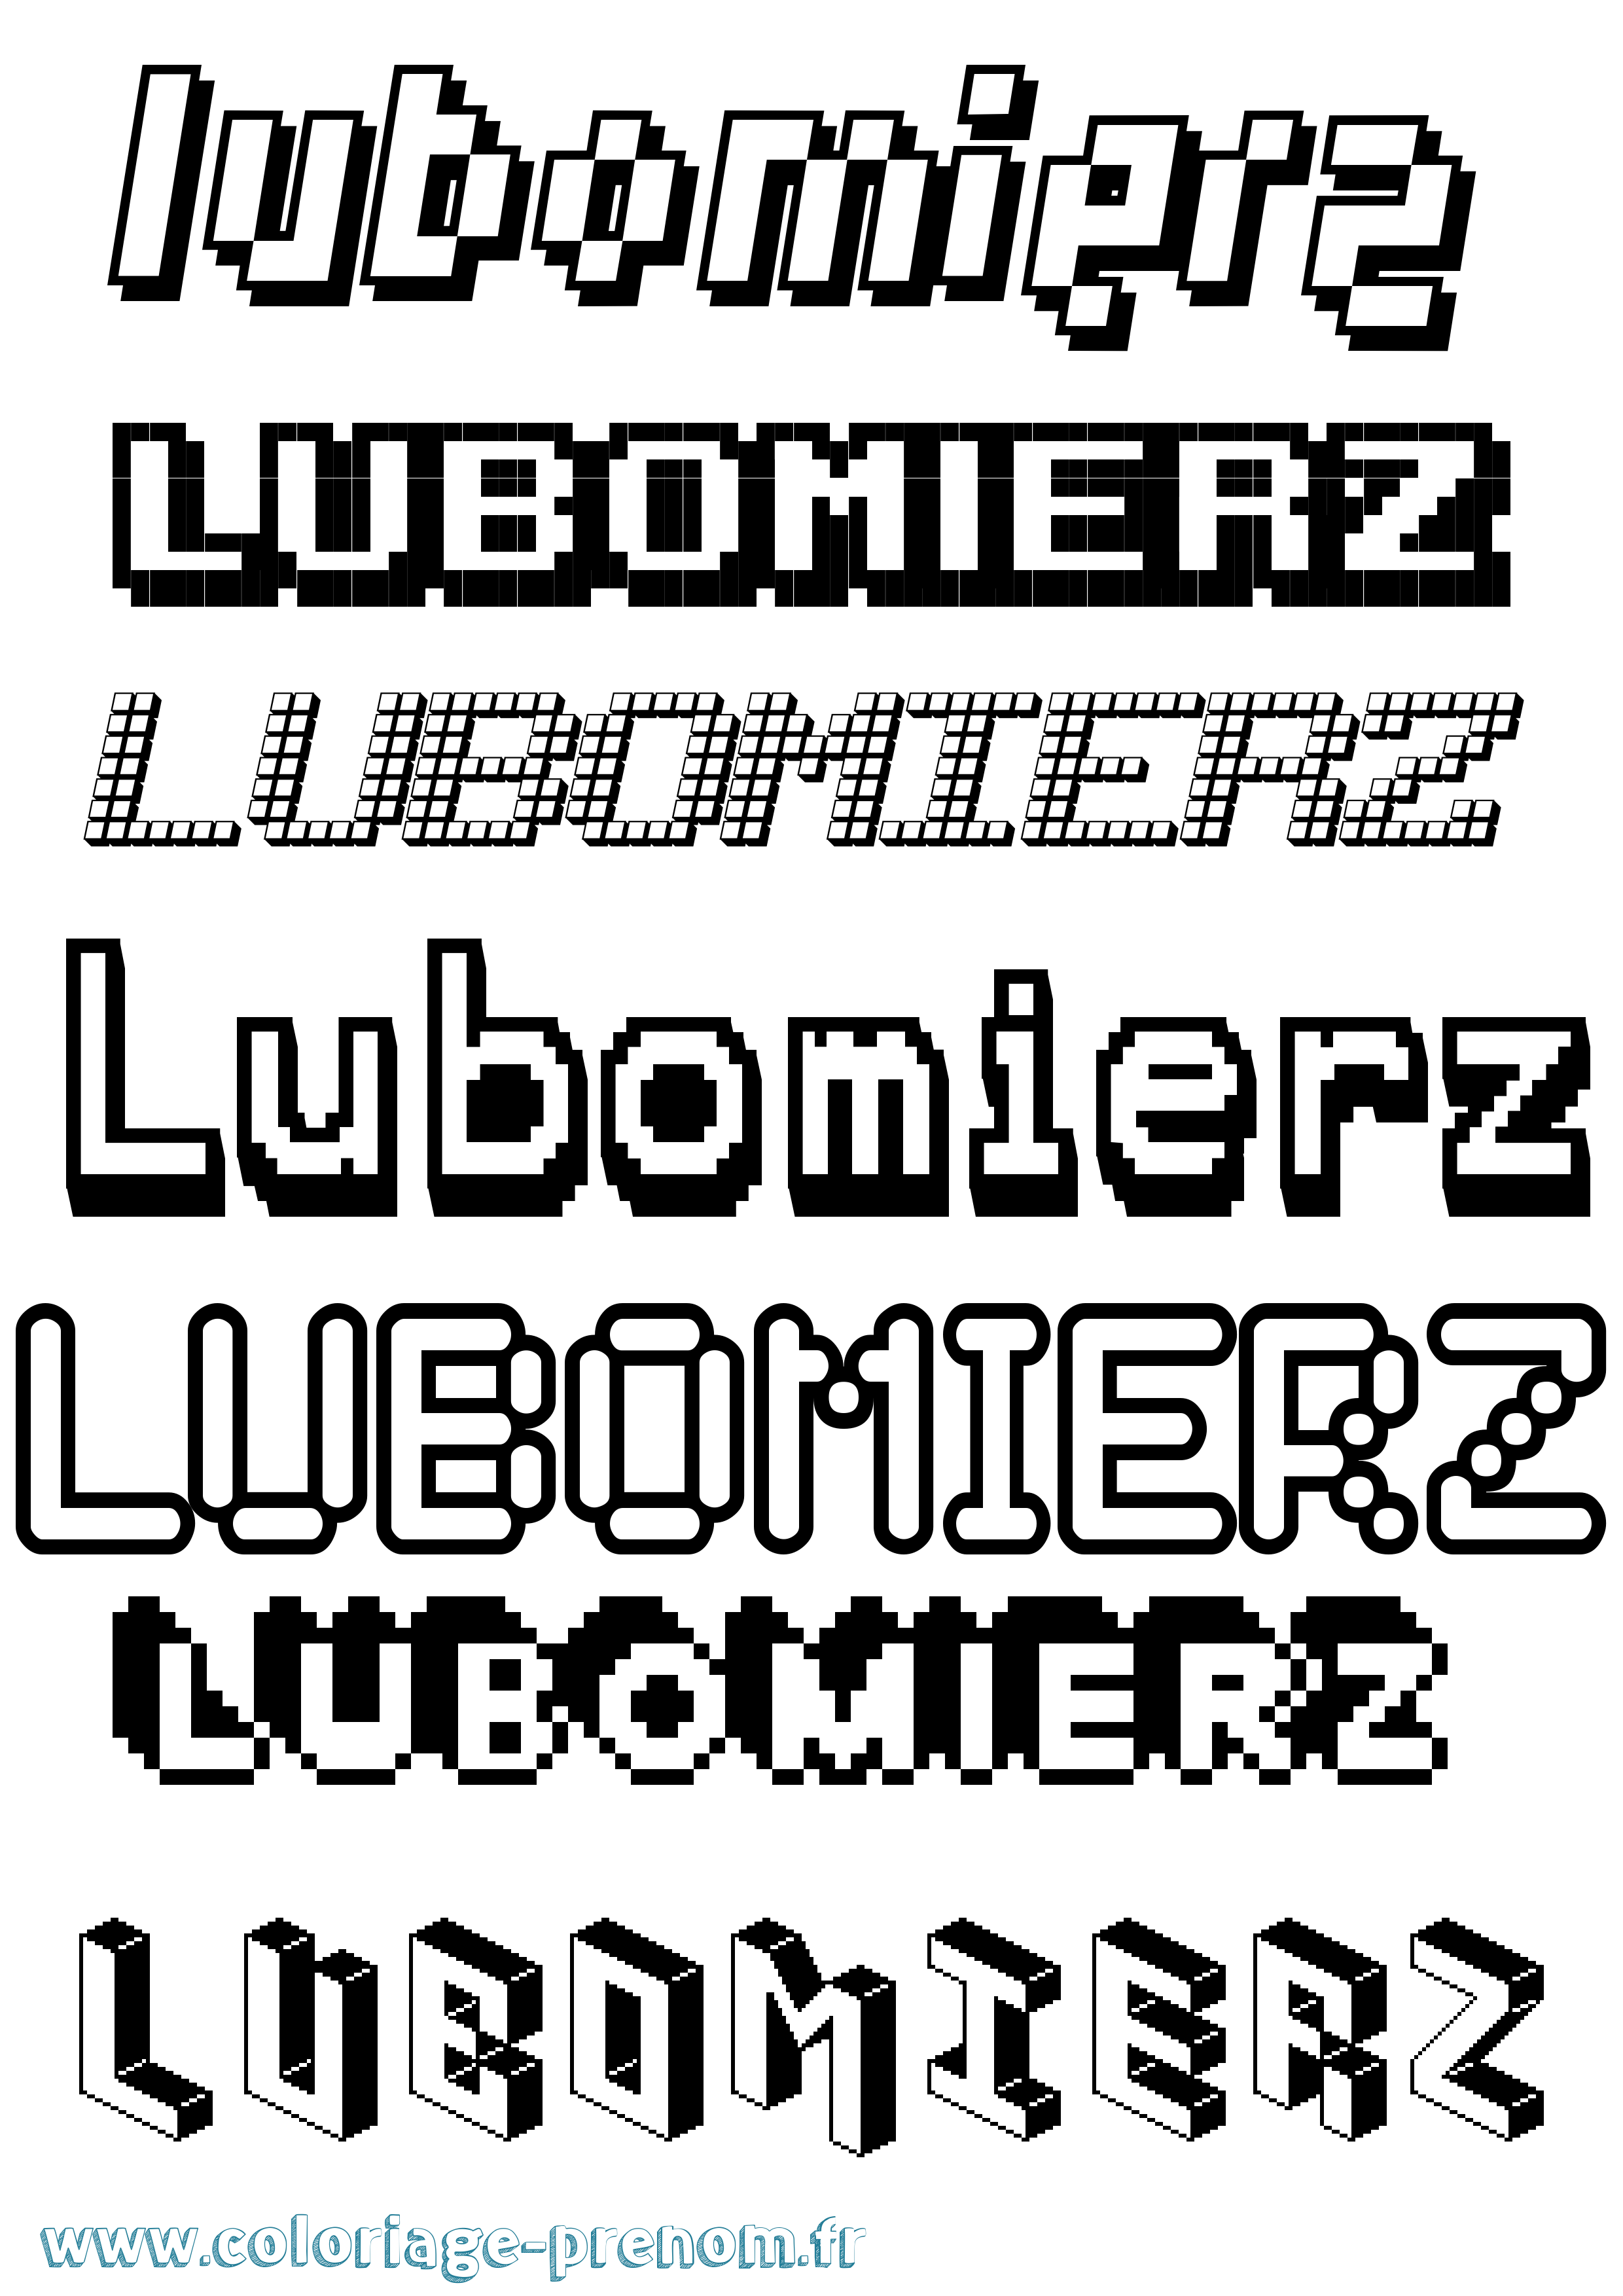 Coloriage prénom Lubomierz Pixel